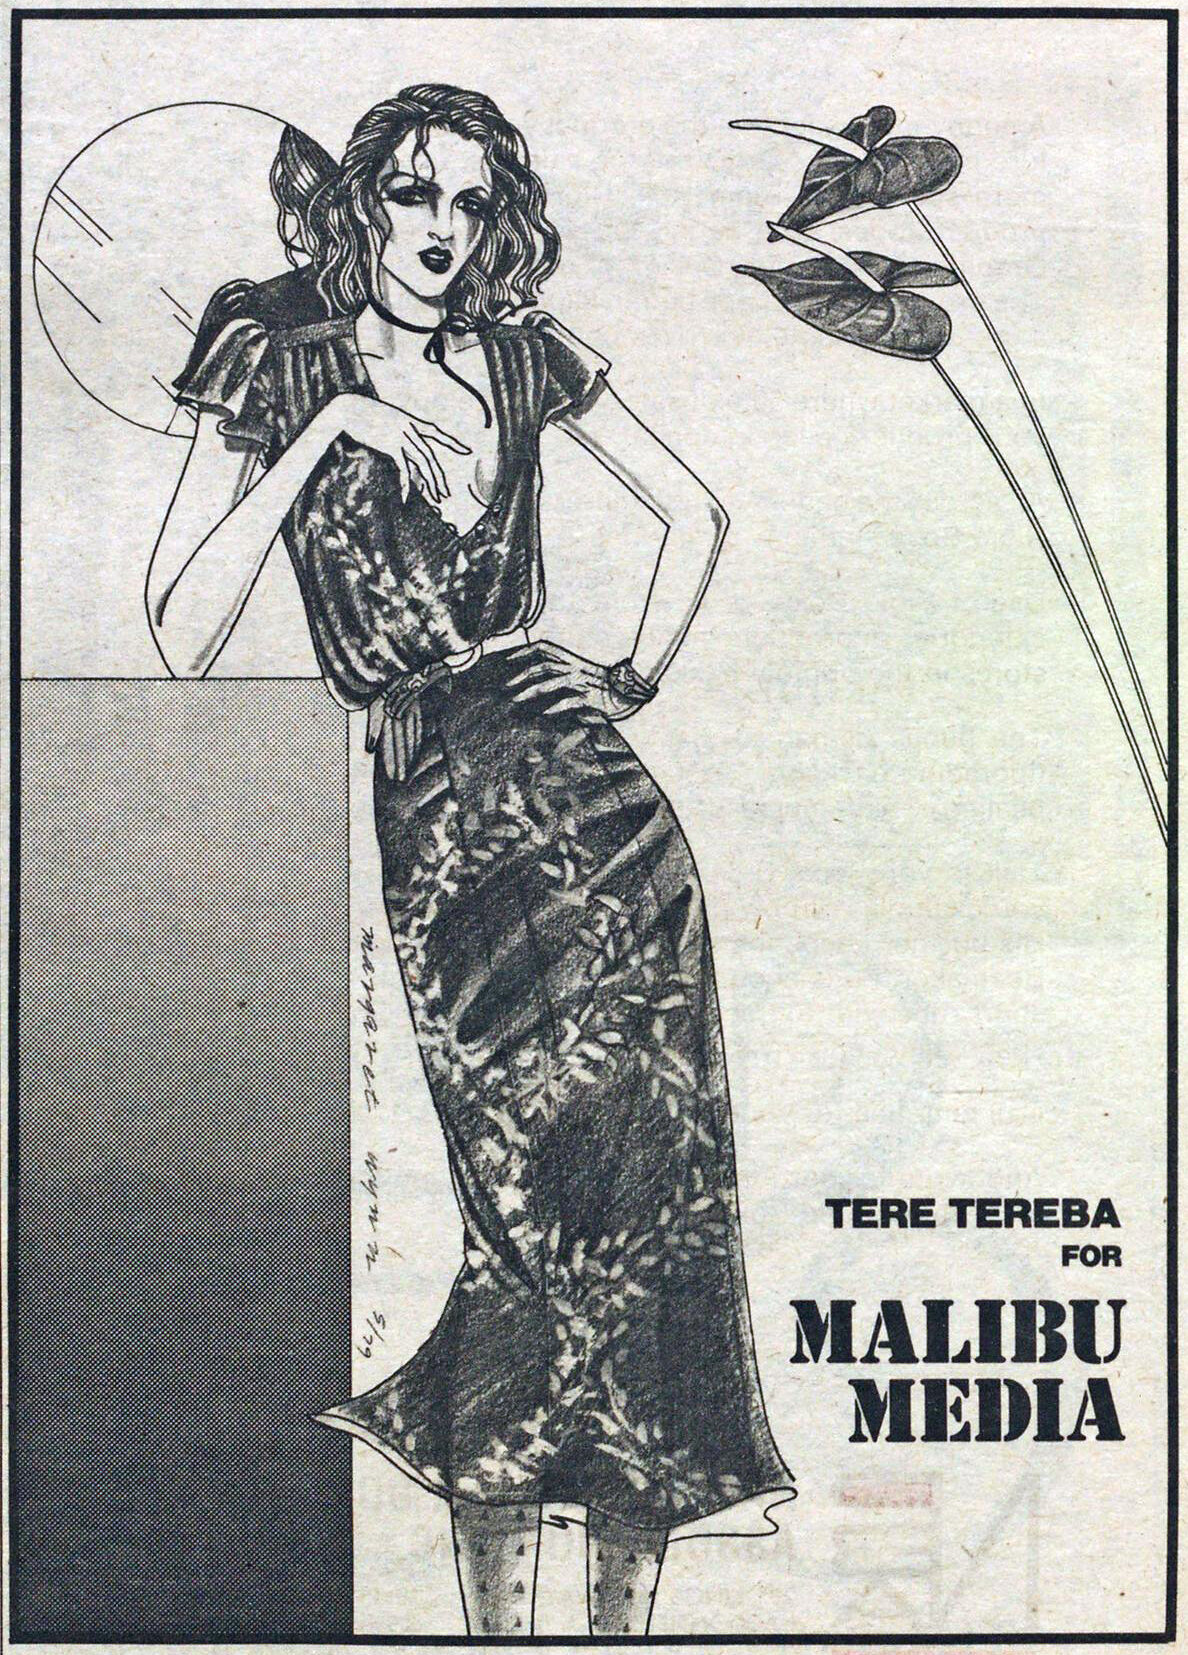 Malibu Media ad. WWD, May 23, 1979.